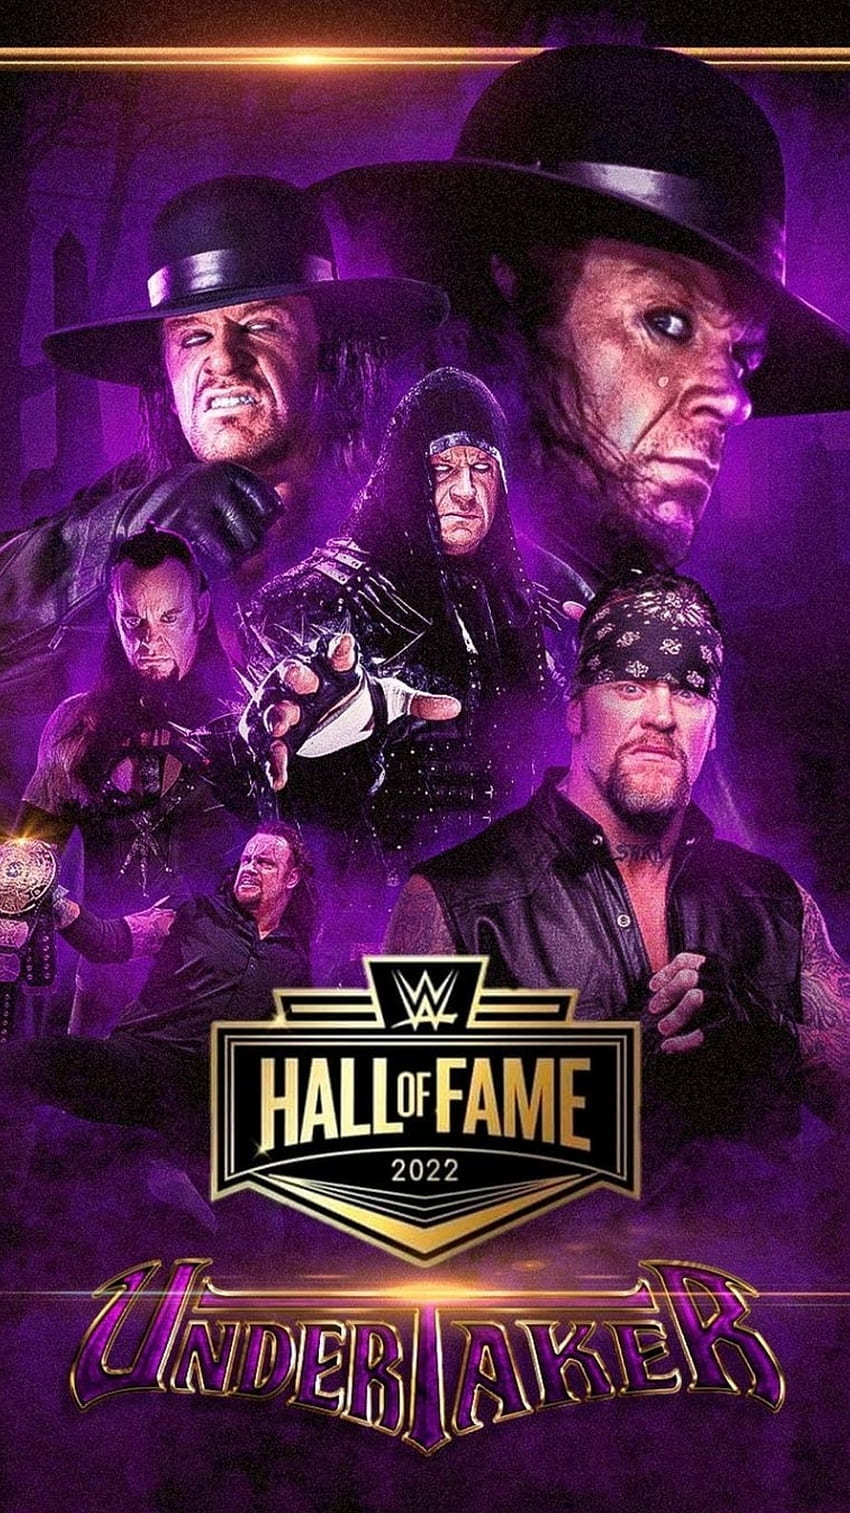 NEW The Undertaker WrestleMania 36 wallpaper  Kupy Wrestling Wallpapers